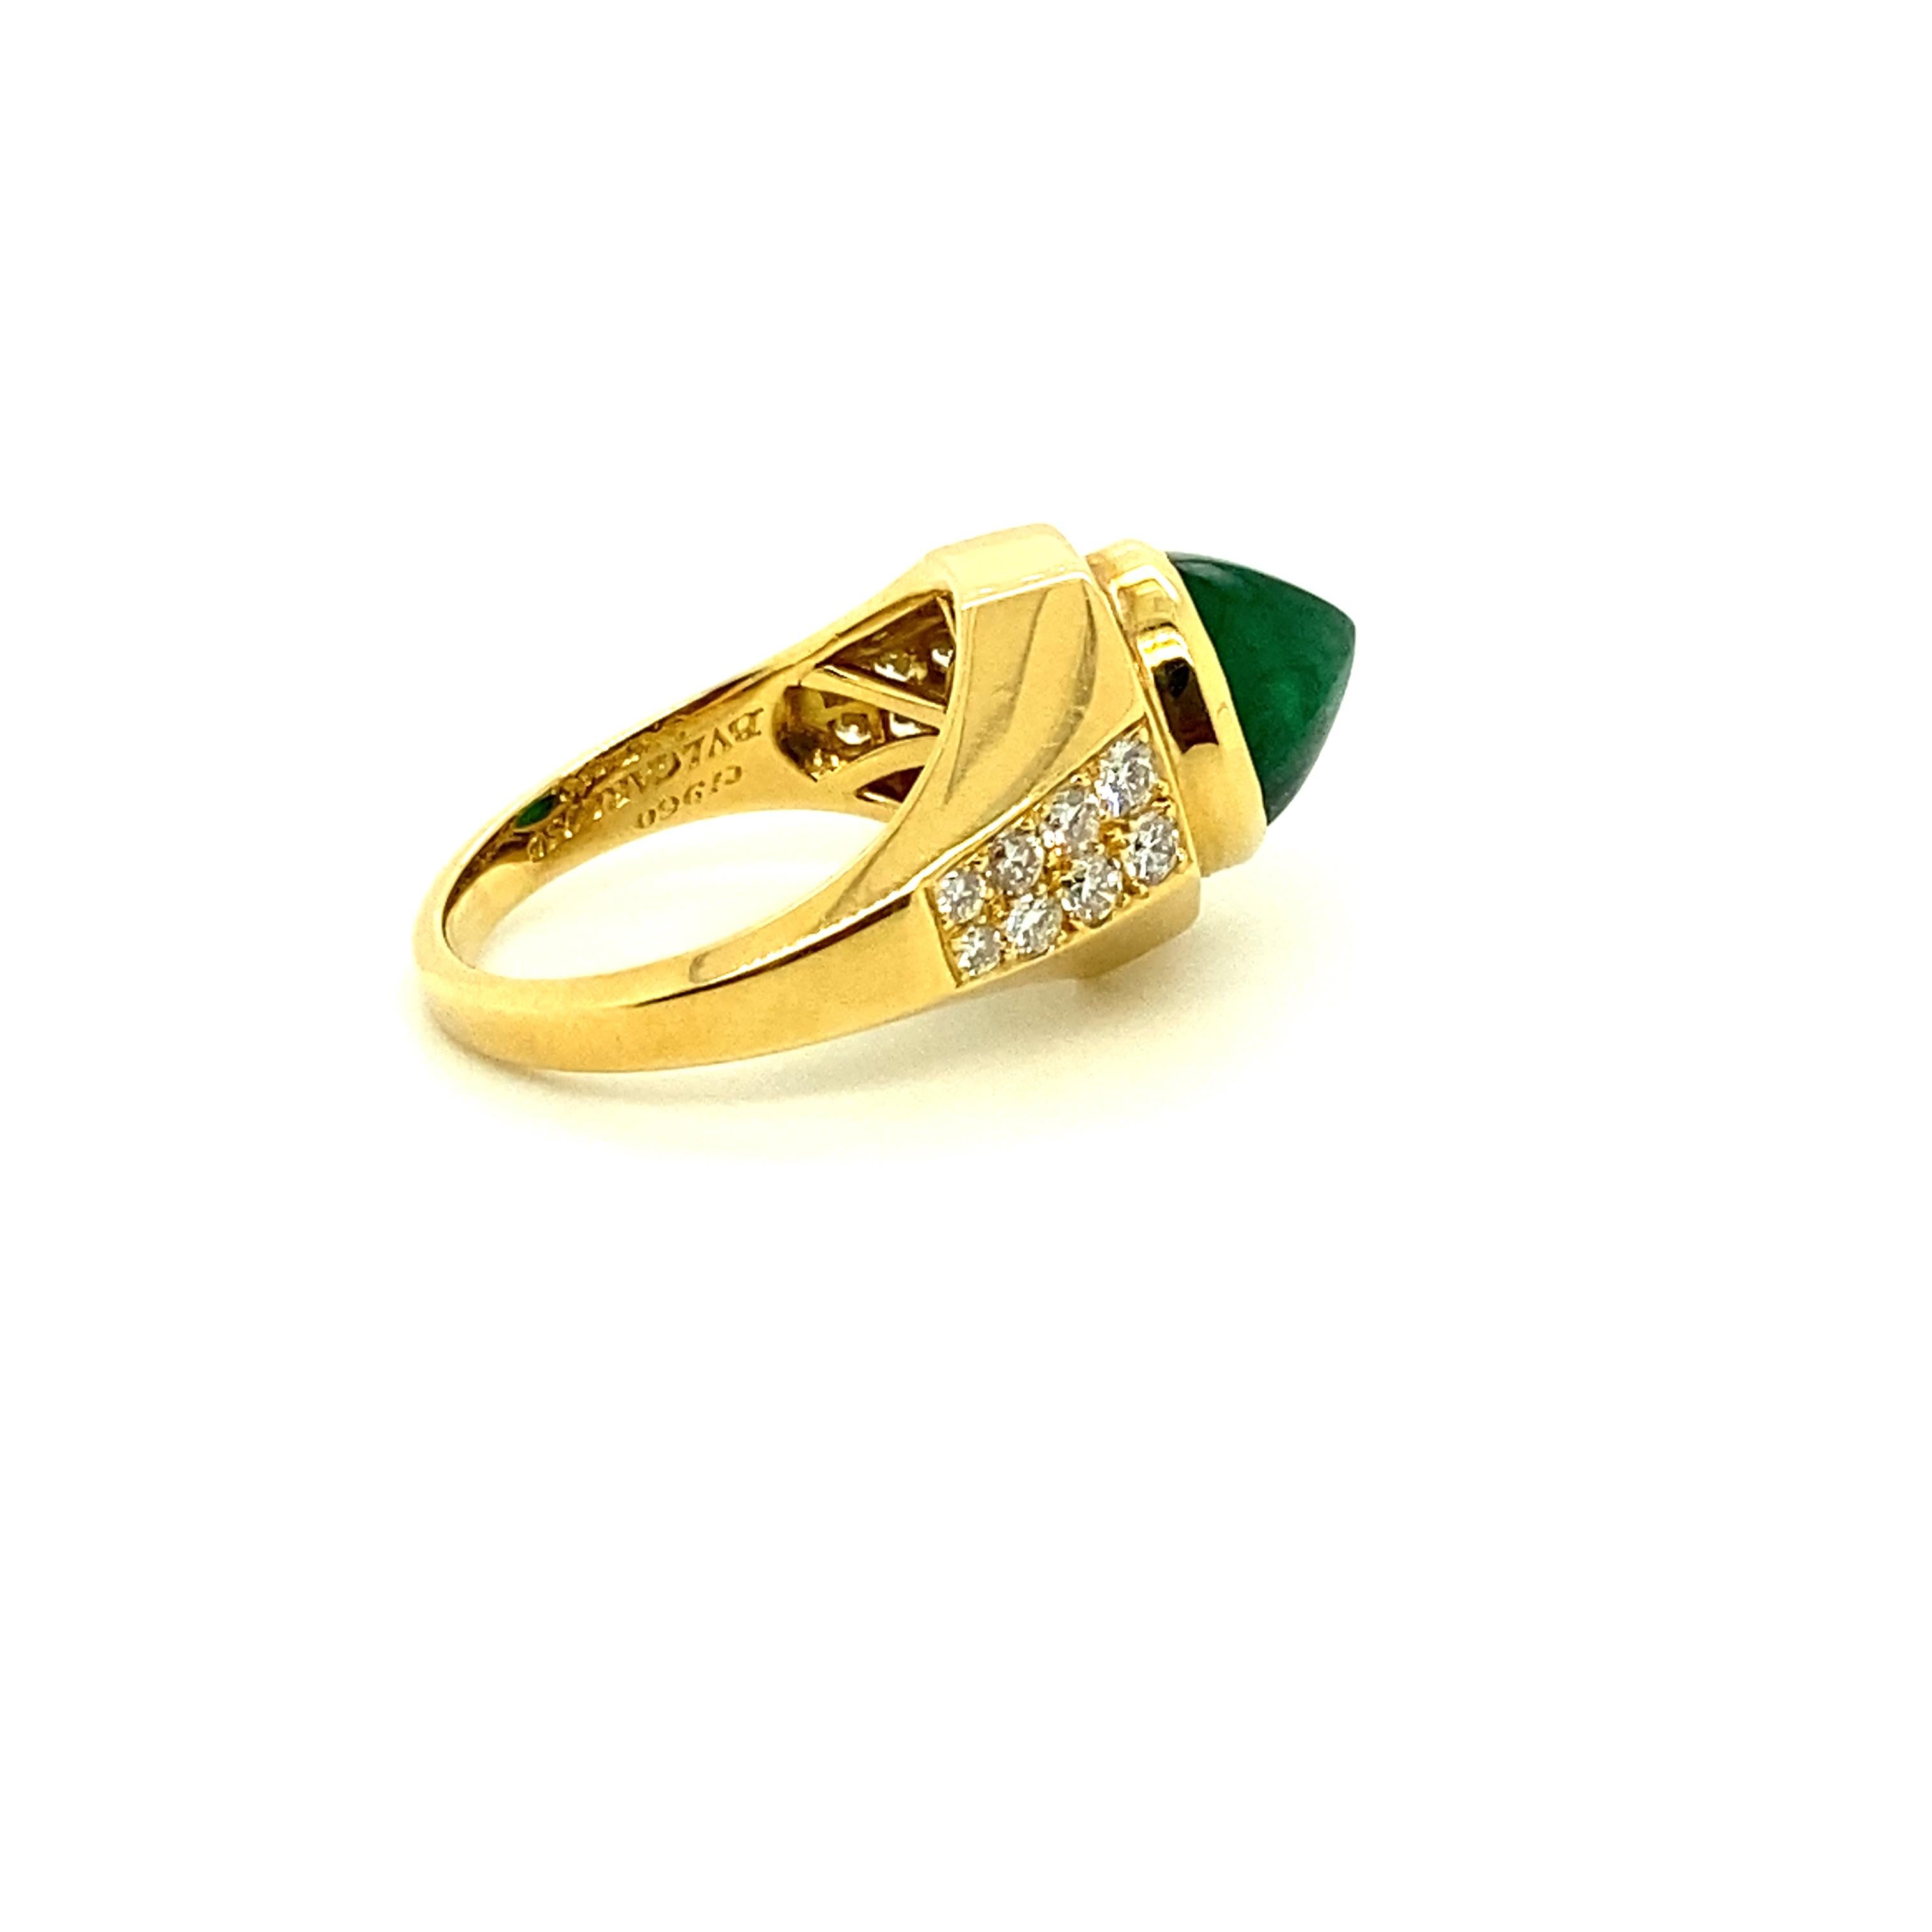 bvlgari emerald ring